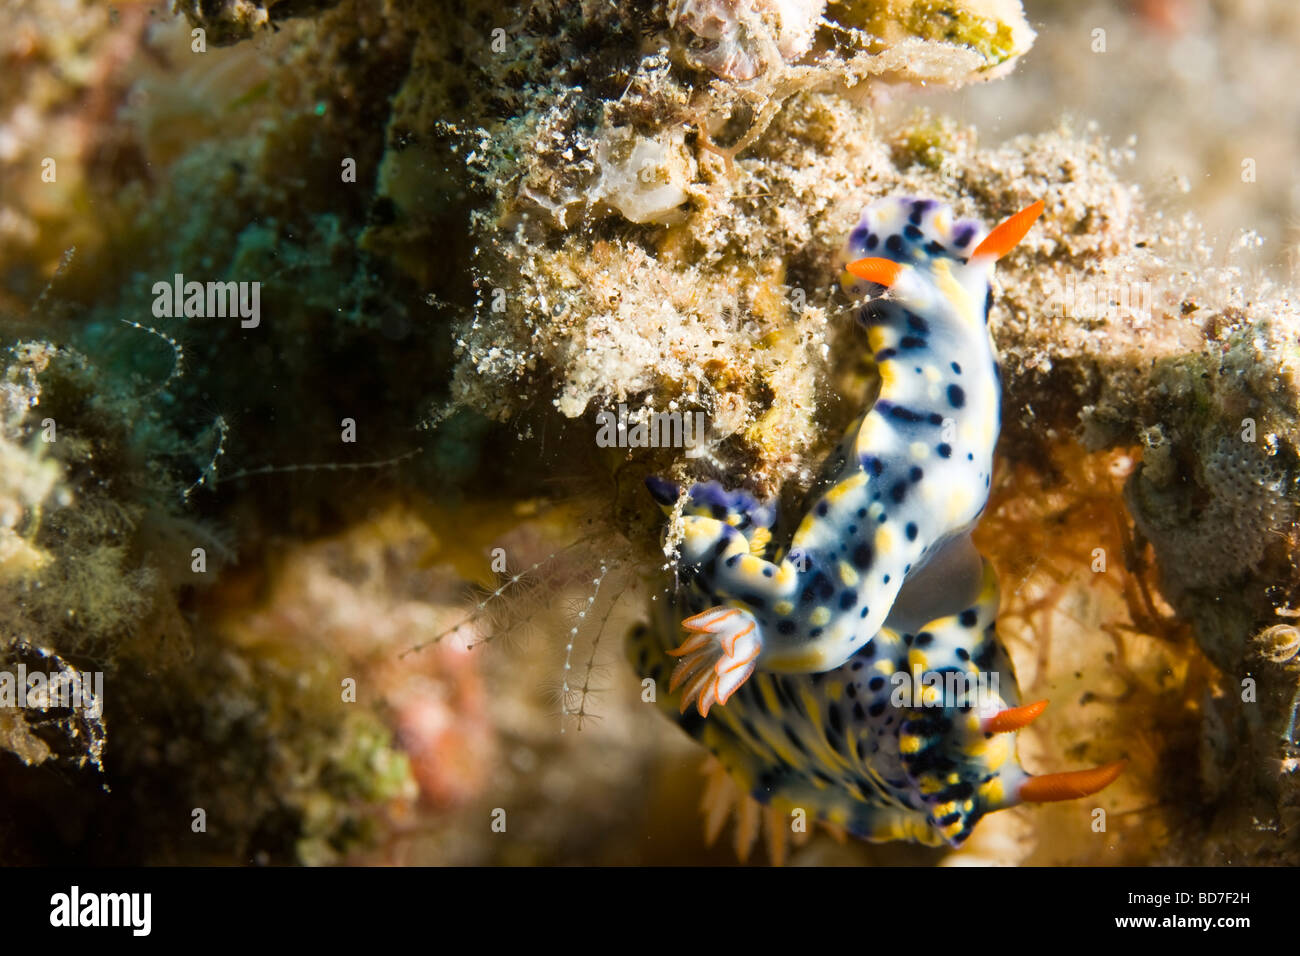 Un marine opisthobranch mollusco gasteropode (Hypselodoris infucata) Foto Stock